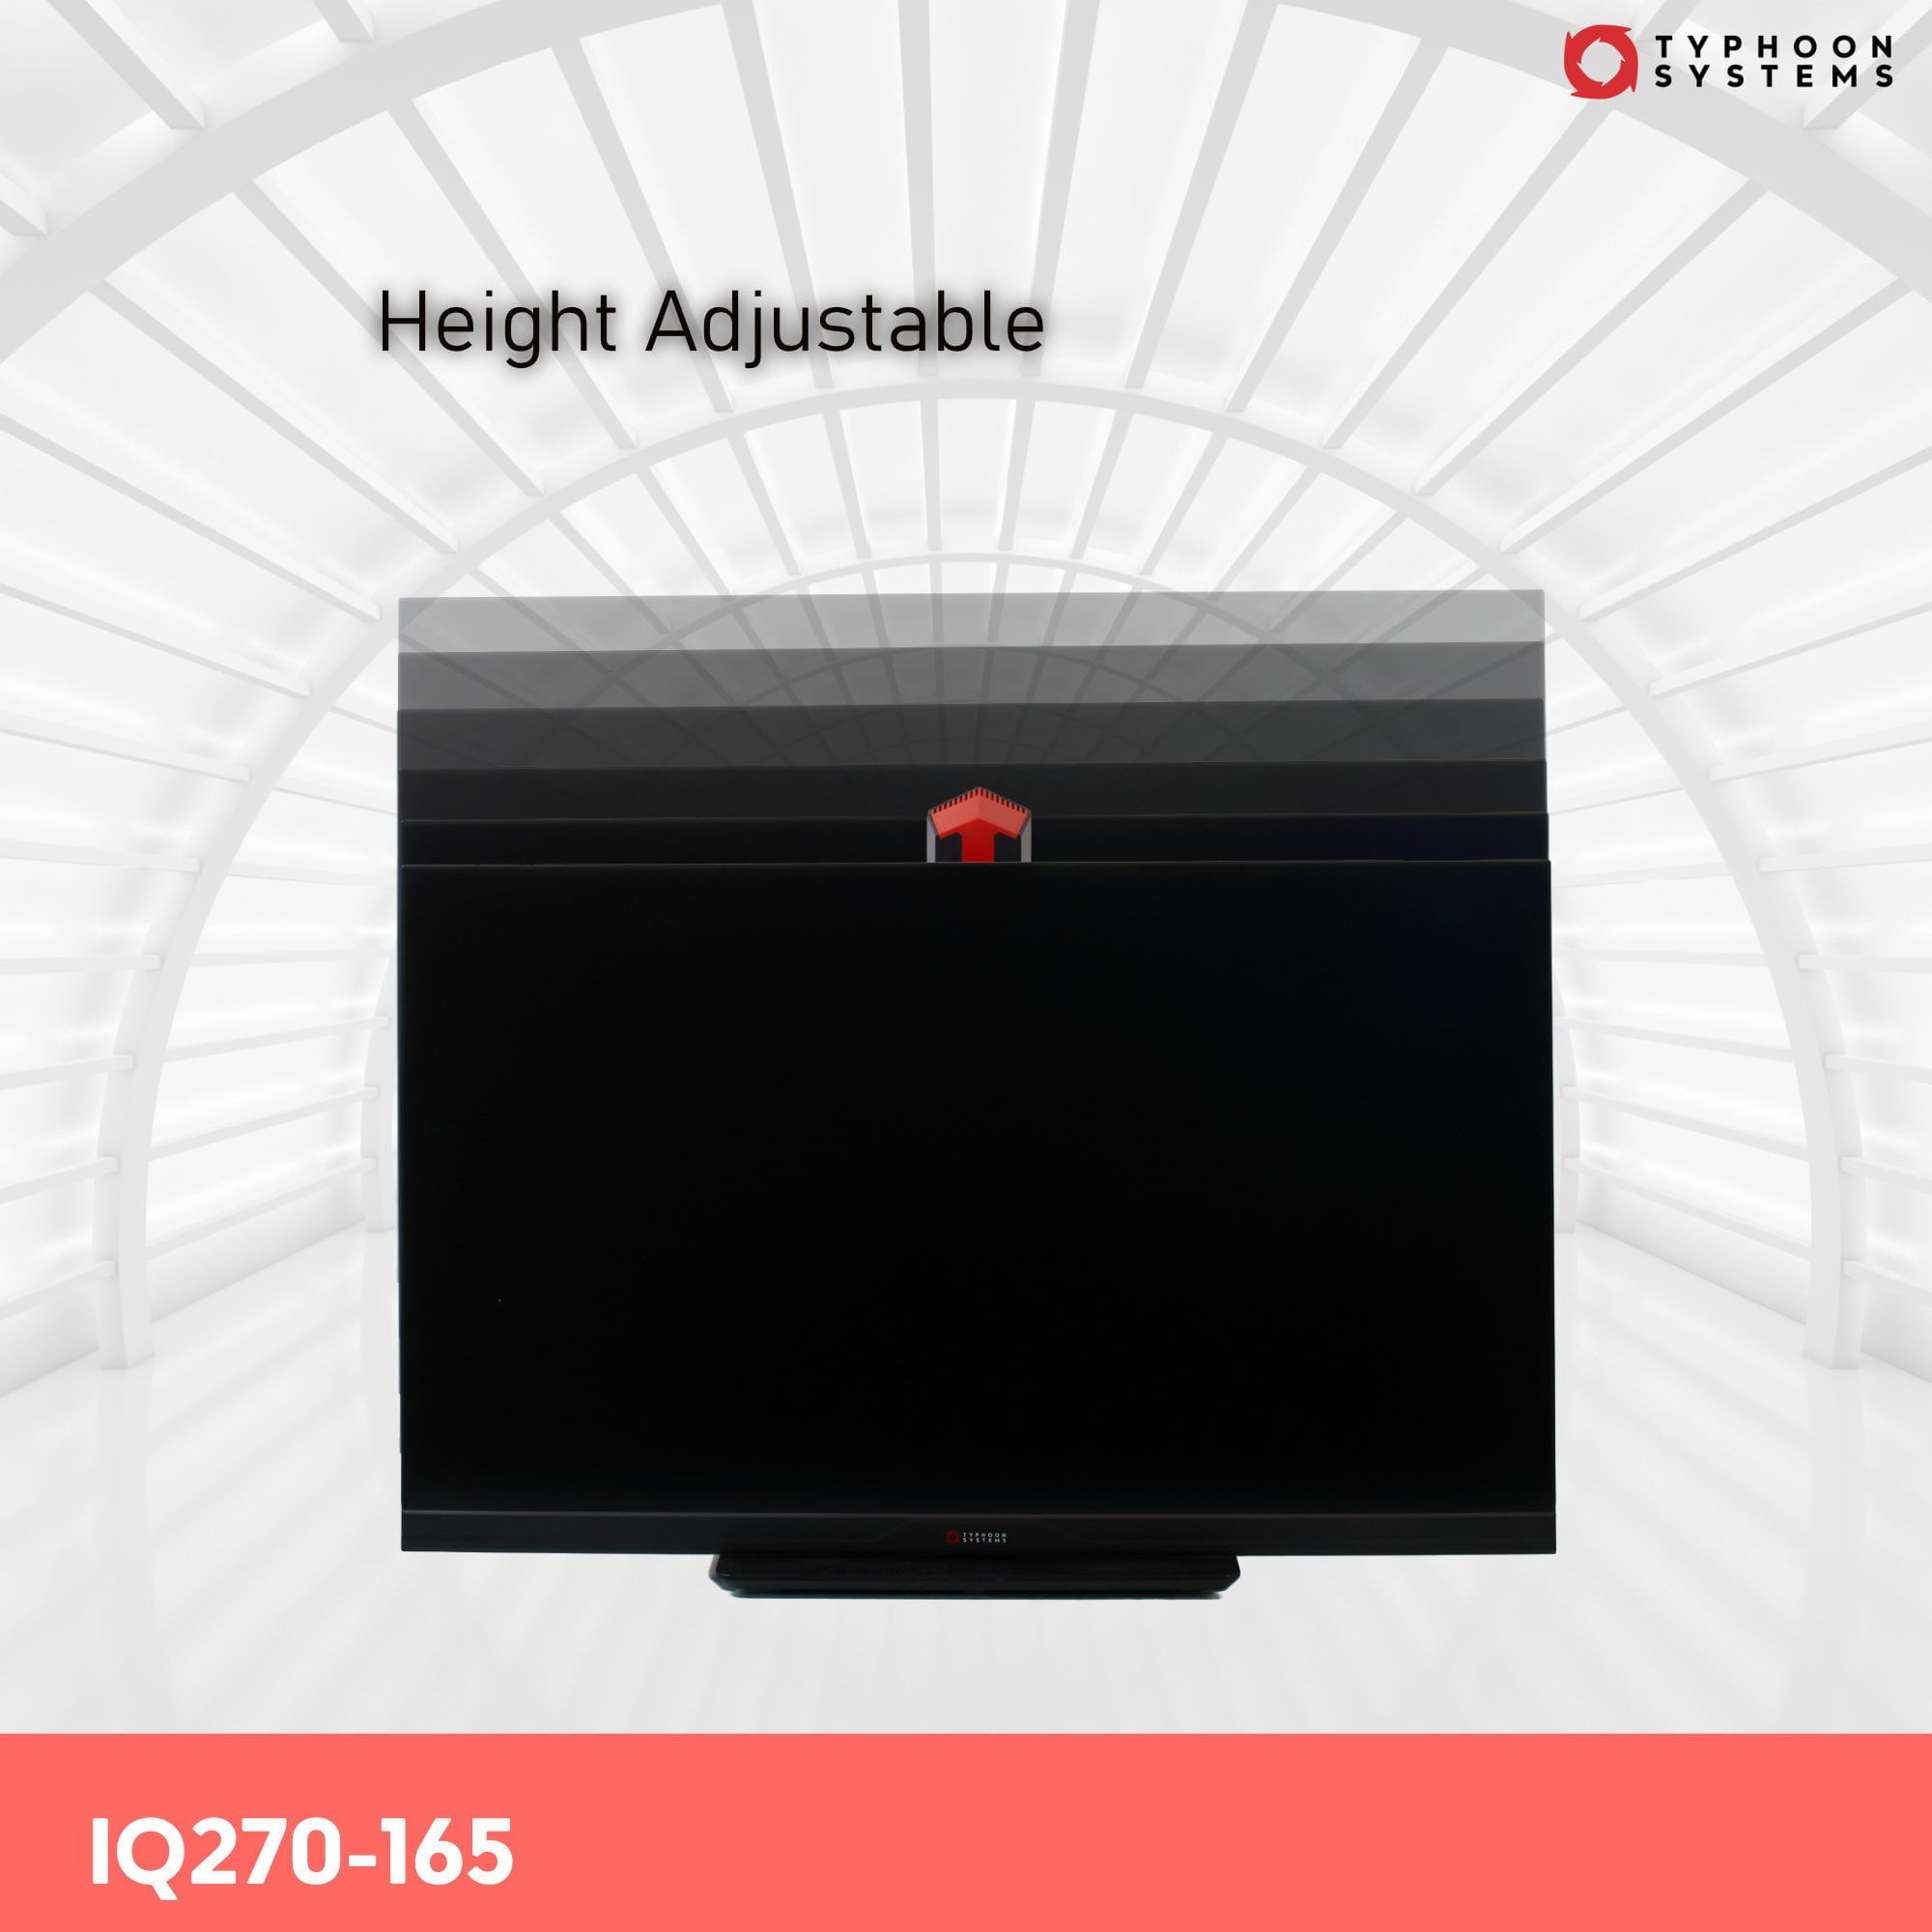 IQ270-165 Height Adjustable